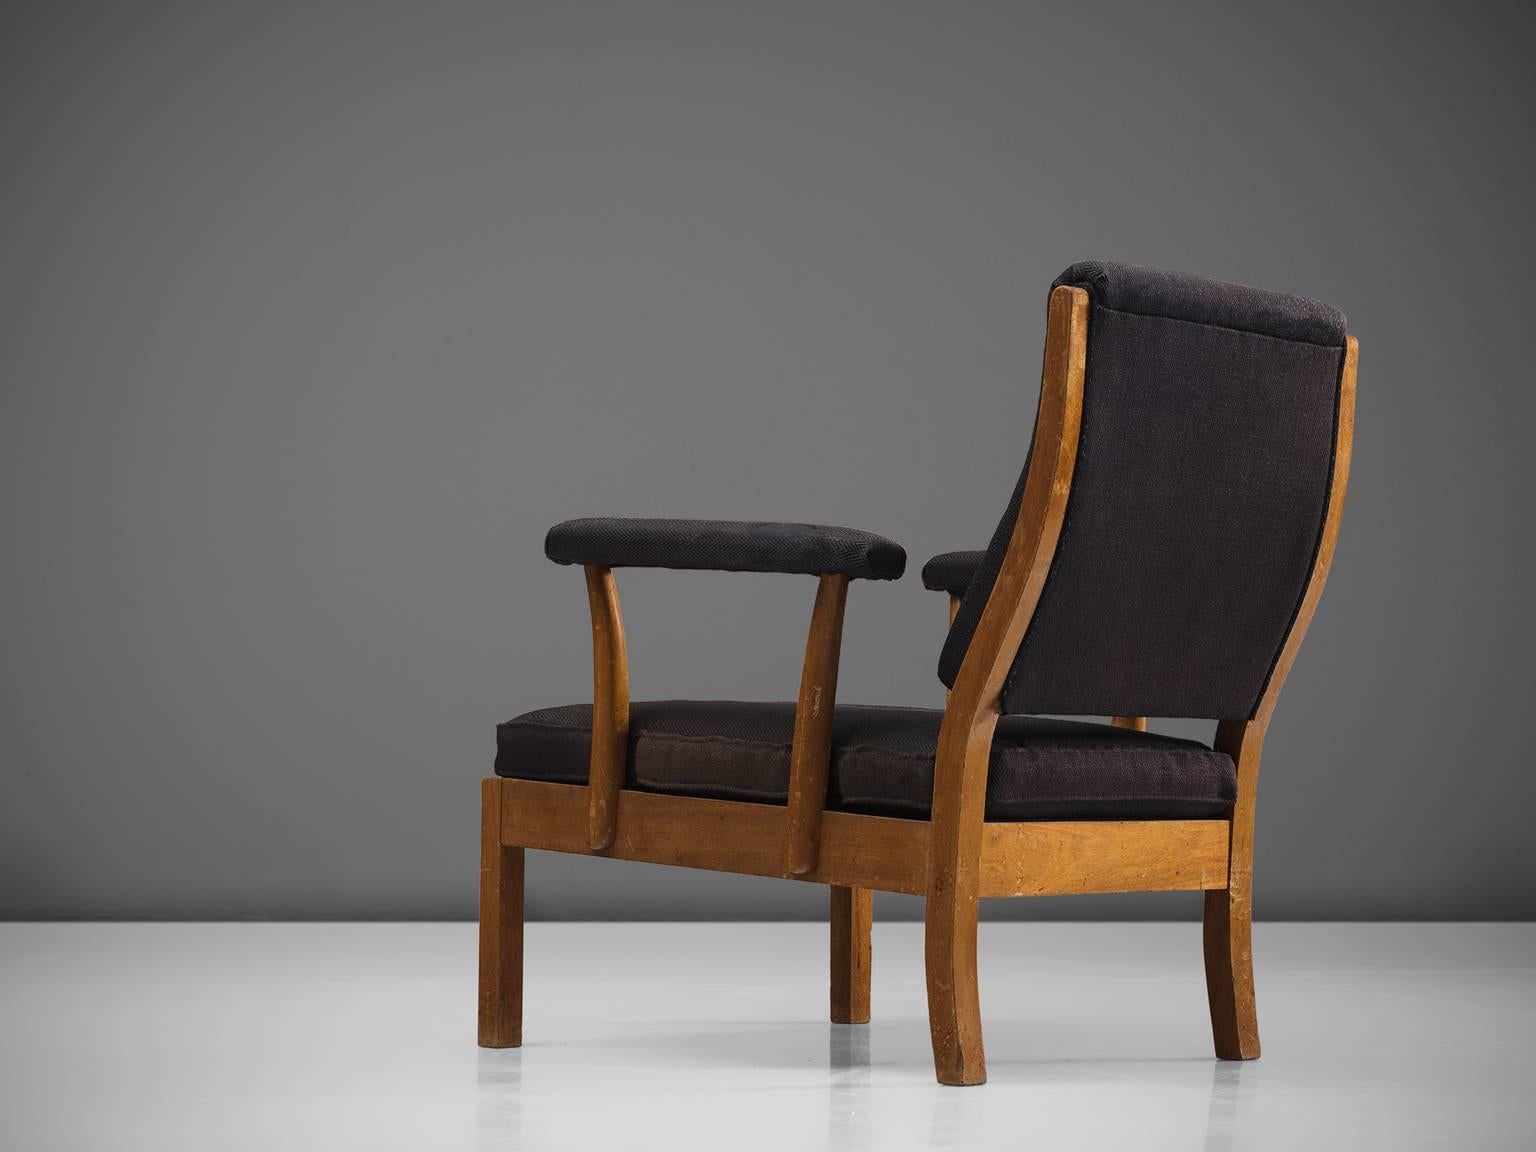 Scandinavian Modern Josef Frank Lounge Chair in Mahogany, circa 1934